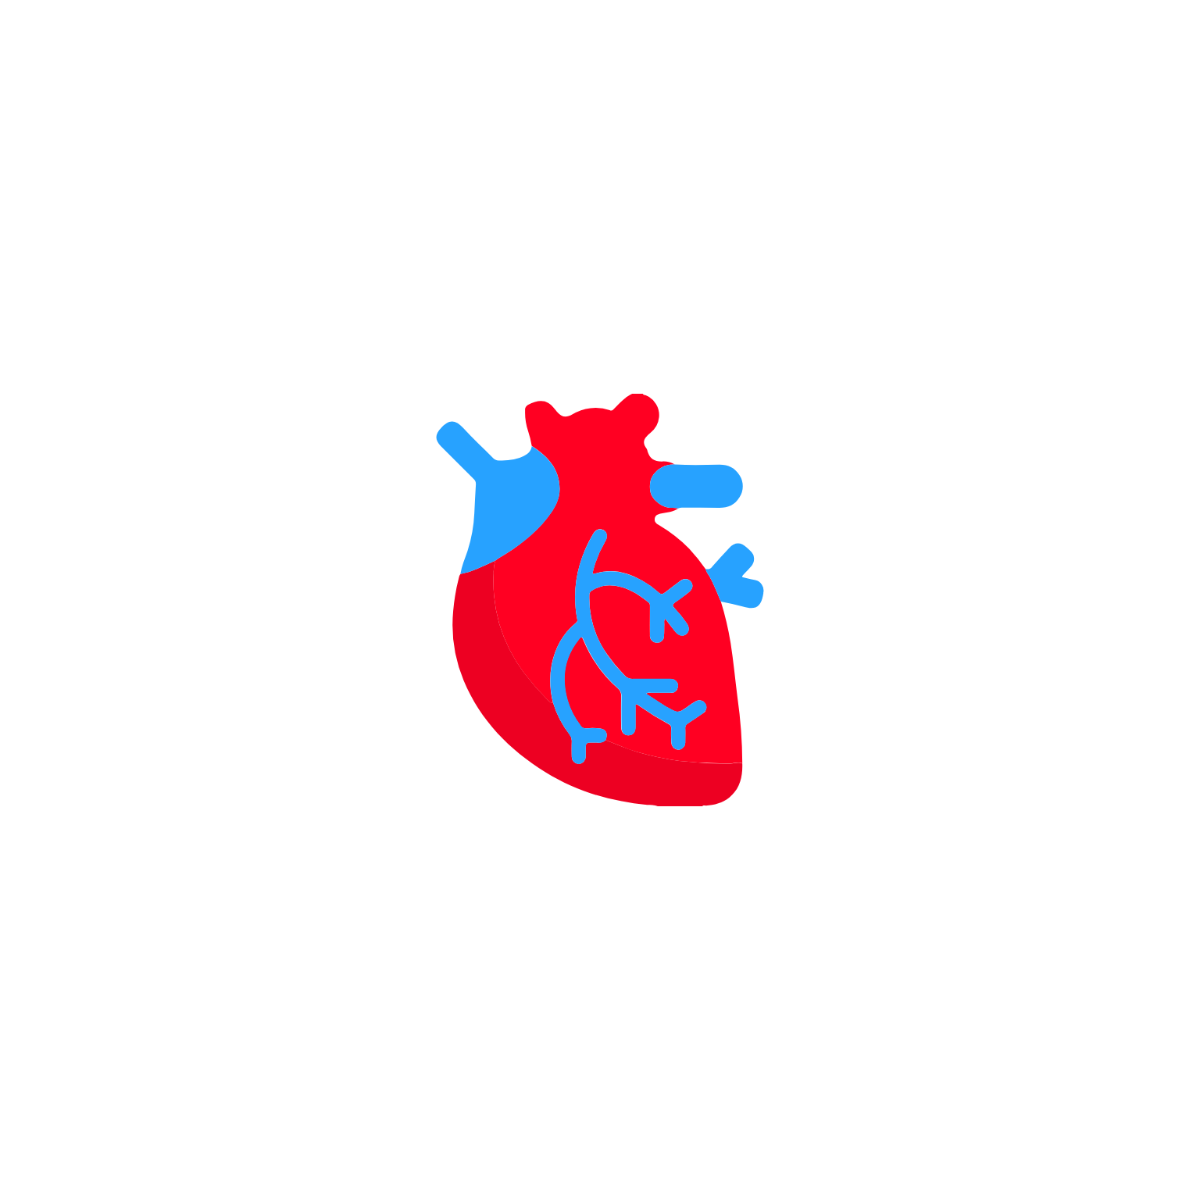 Human Heart Icon